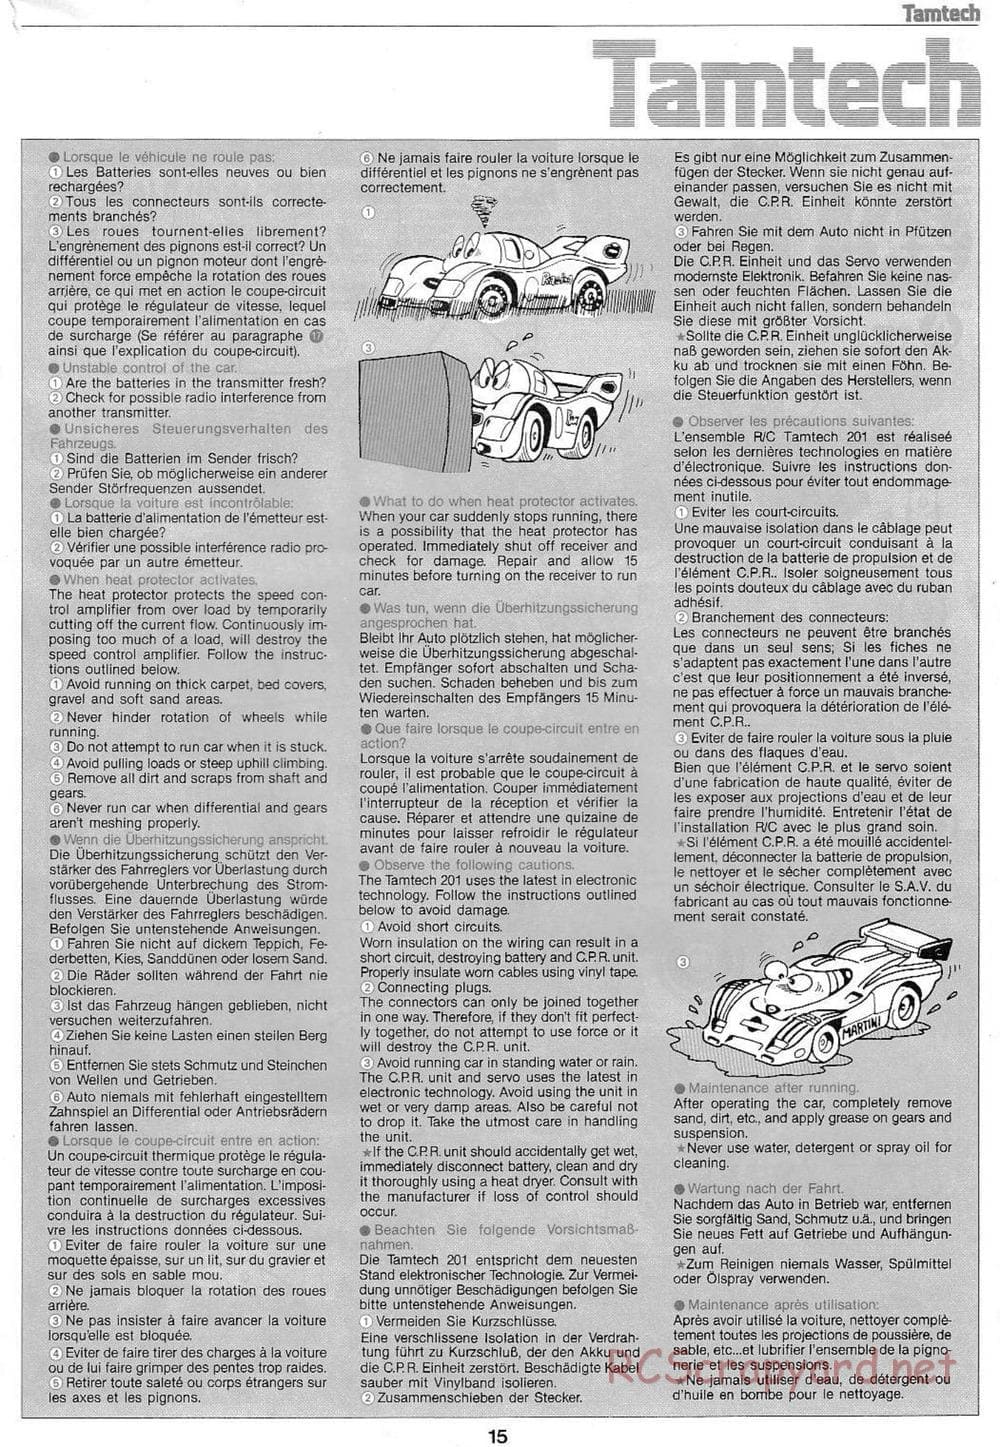 Tamiya - Tamtech - Porsche 962C Chassis - Manual - Page 15